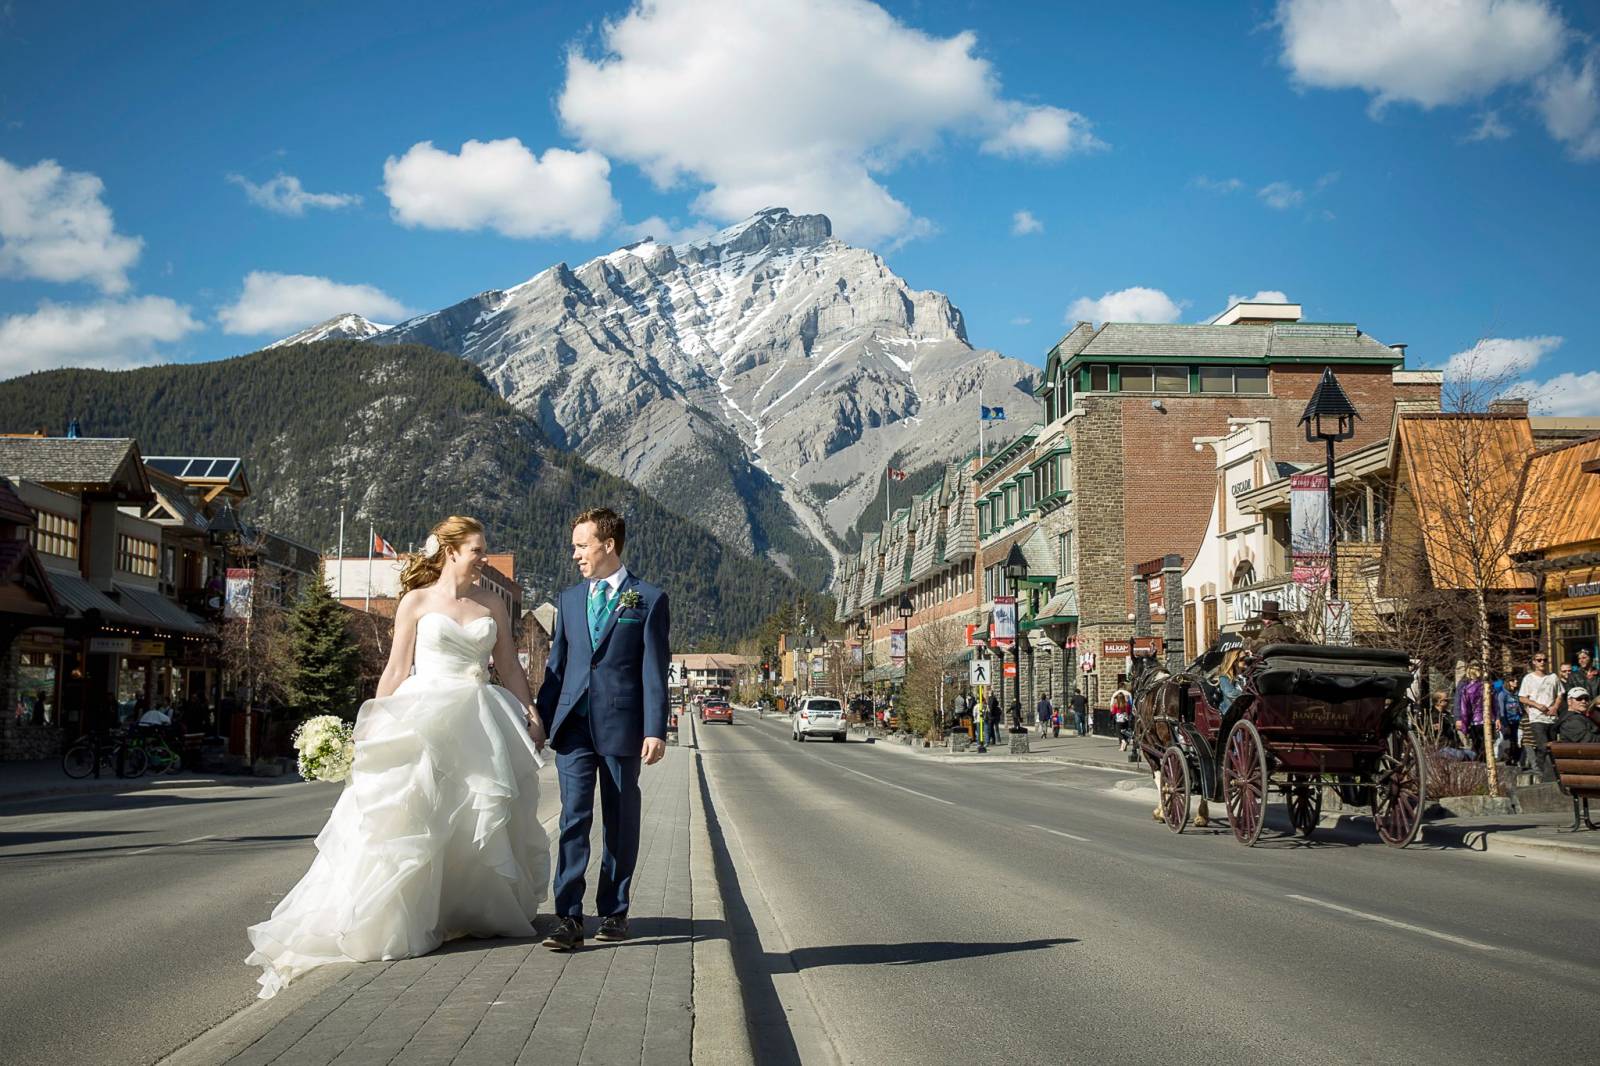 Banff avenue wedding, cascade mountain, banff, bride and groom portraits, mountain wedding, banff we